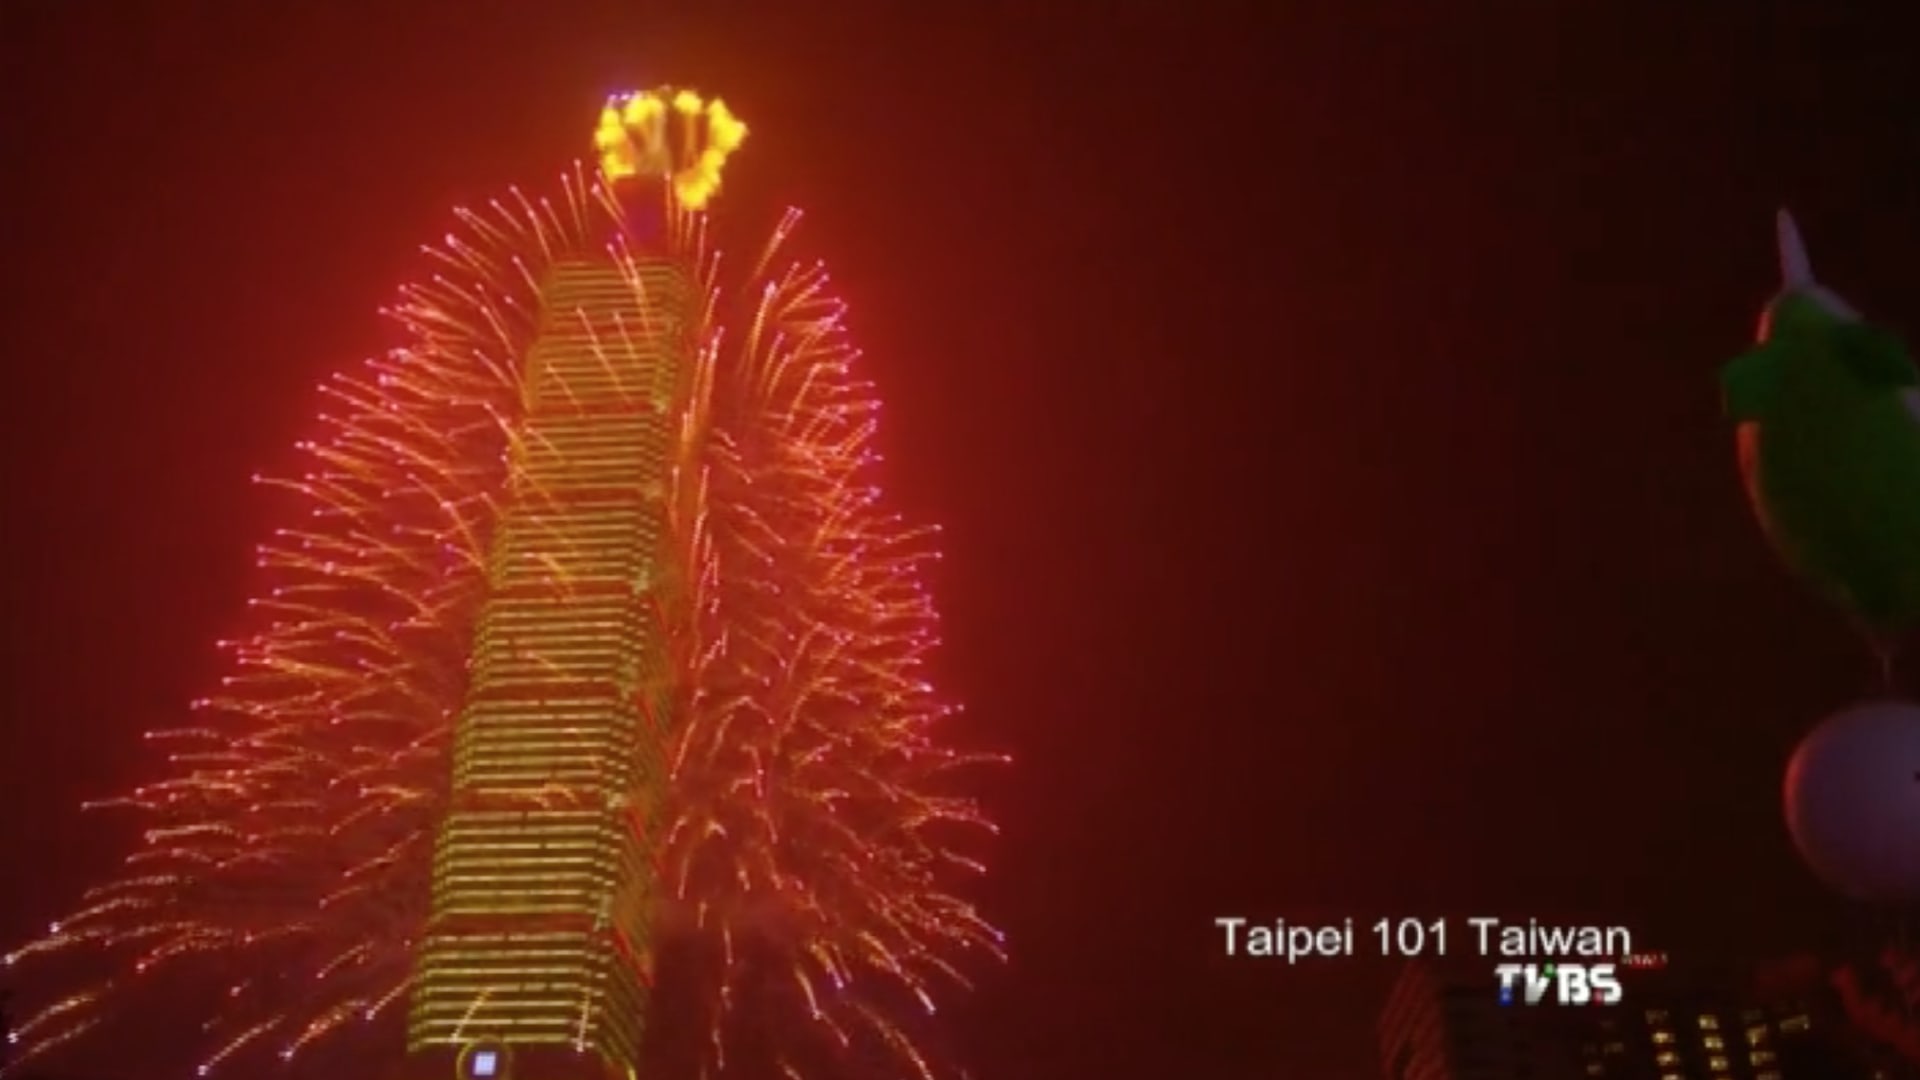 تايوان تدشن 2015 باحتفالات وعروض مبهرة